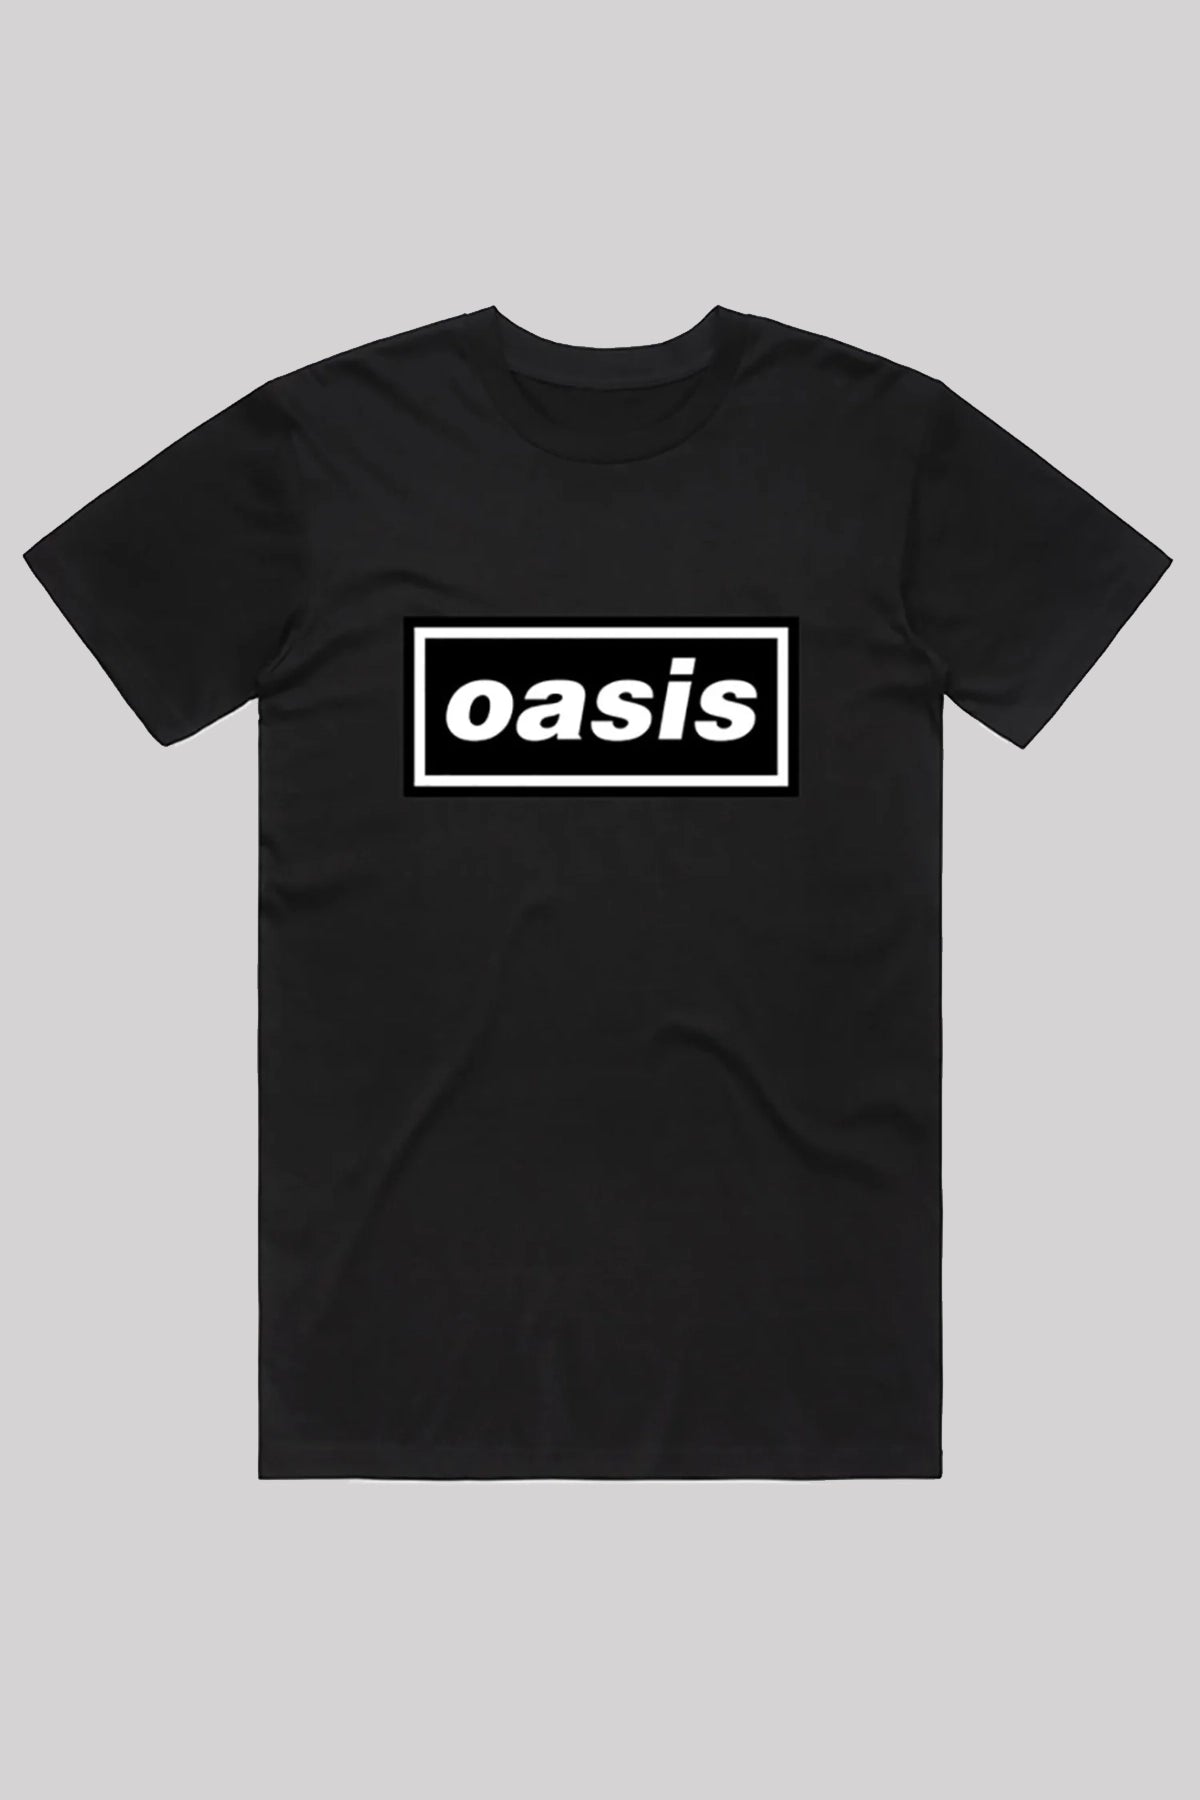 Oasis Classic Logo Black T-Shirt